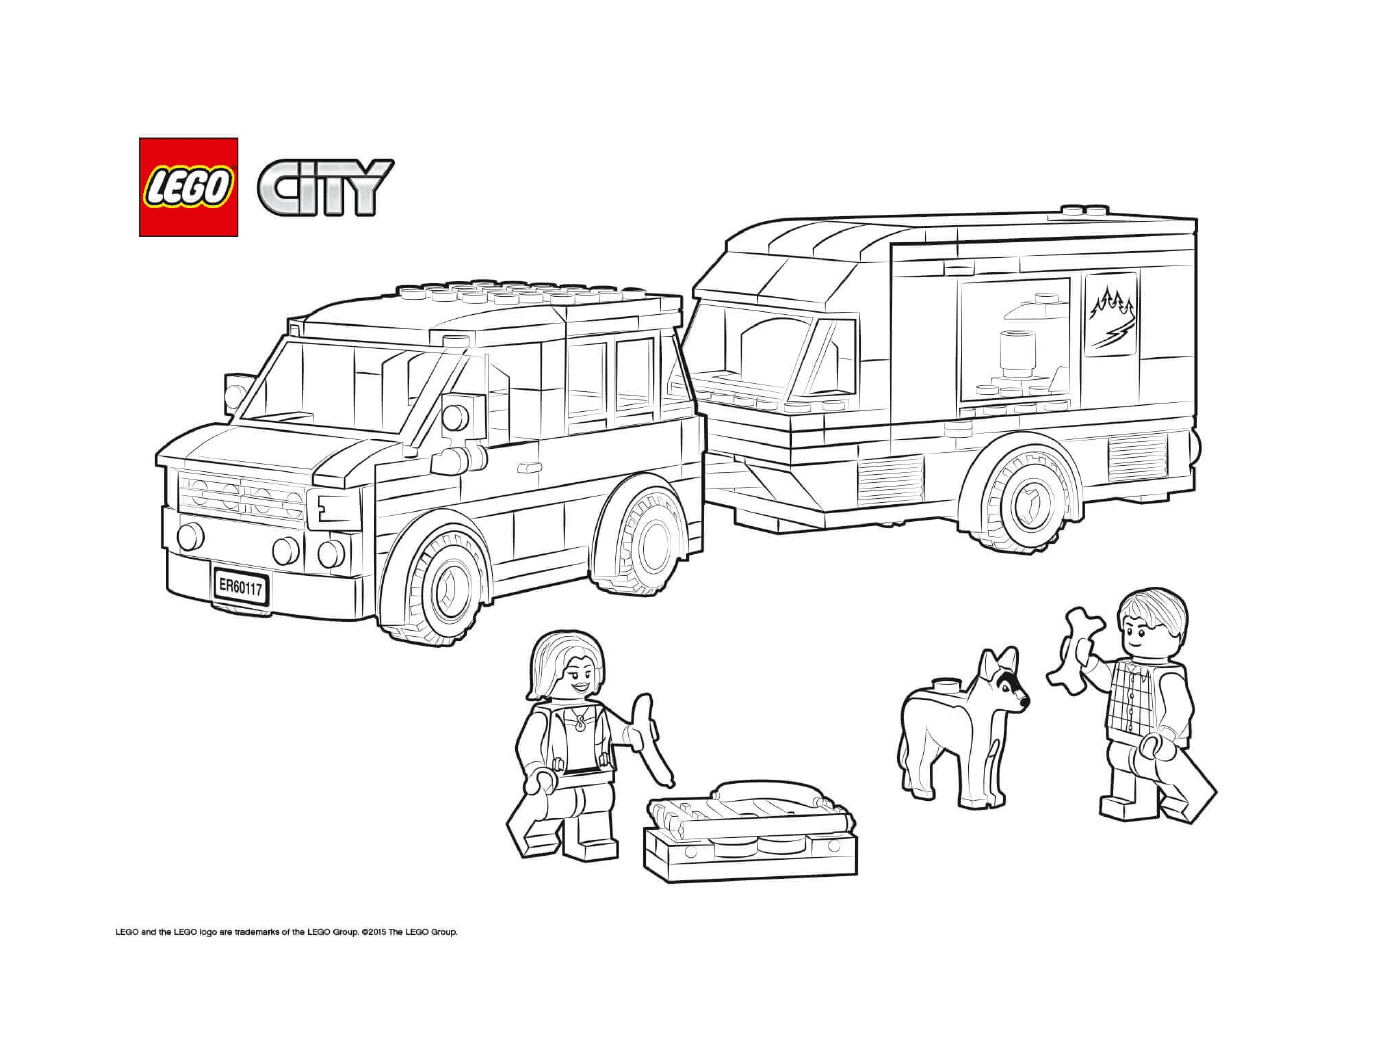  Lego City furgoncino e roulotte 